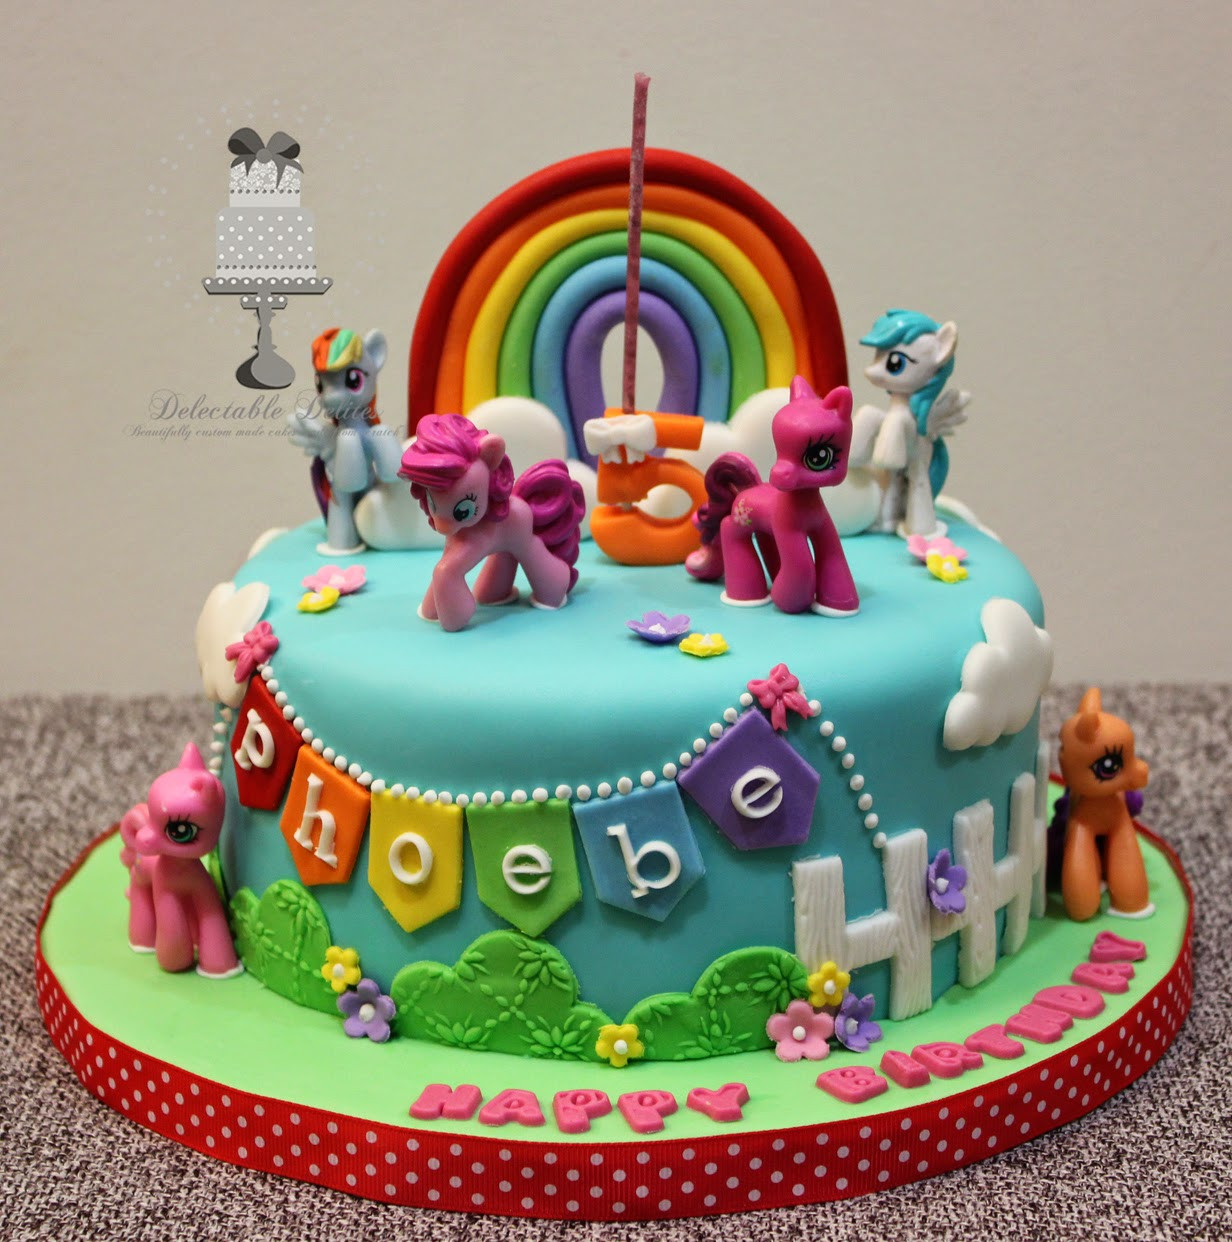 My Little Pony Birthday Cake
 Delectable Delites My Little Pony cake for Phoebe s 5th